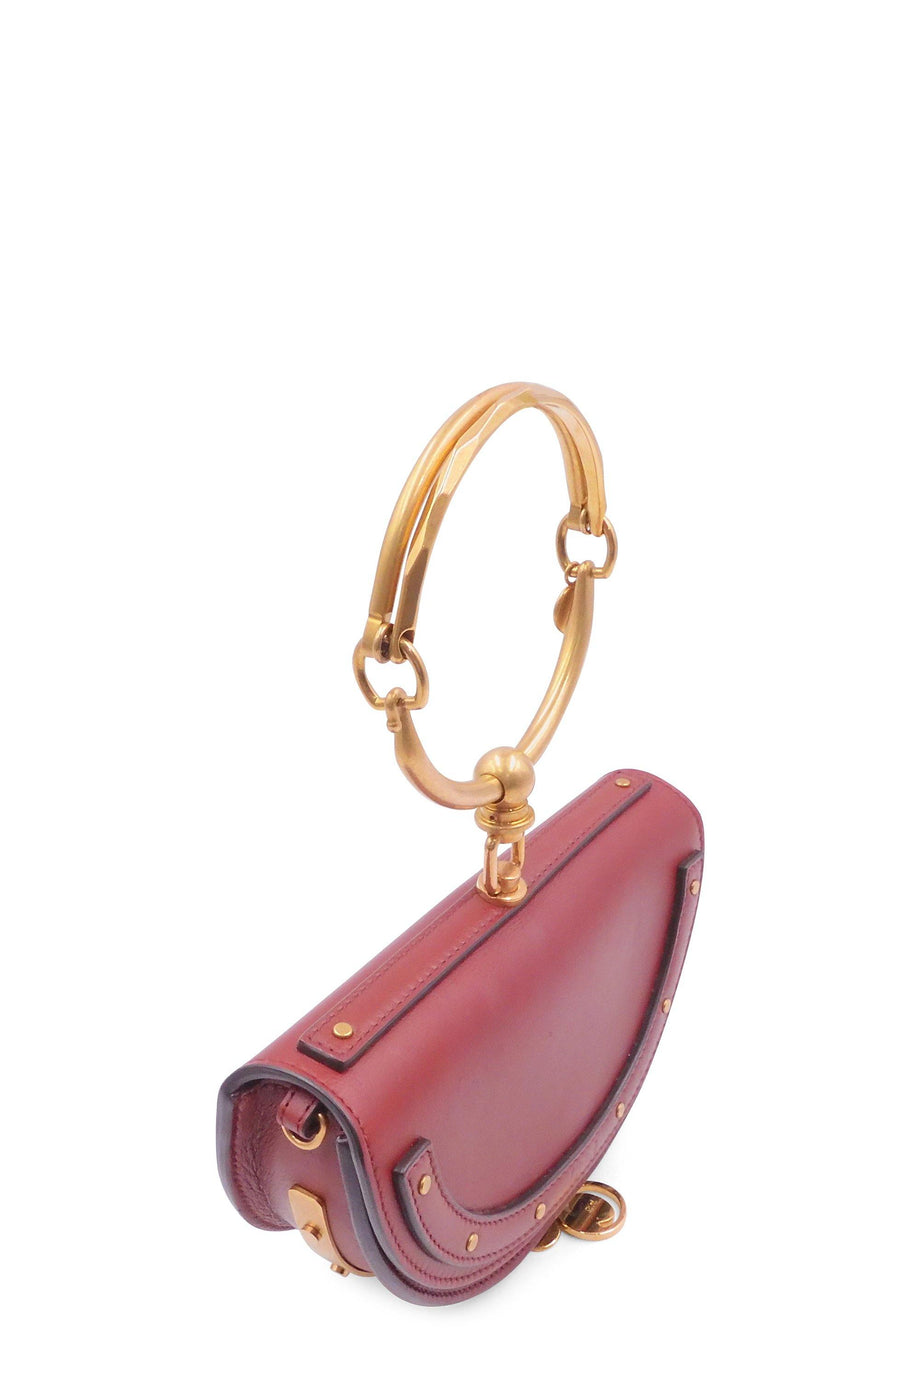 Chloé Nile Small Bracelet Minaudiere Bag In Medium Red